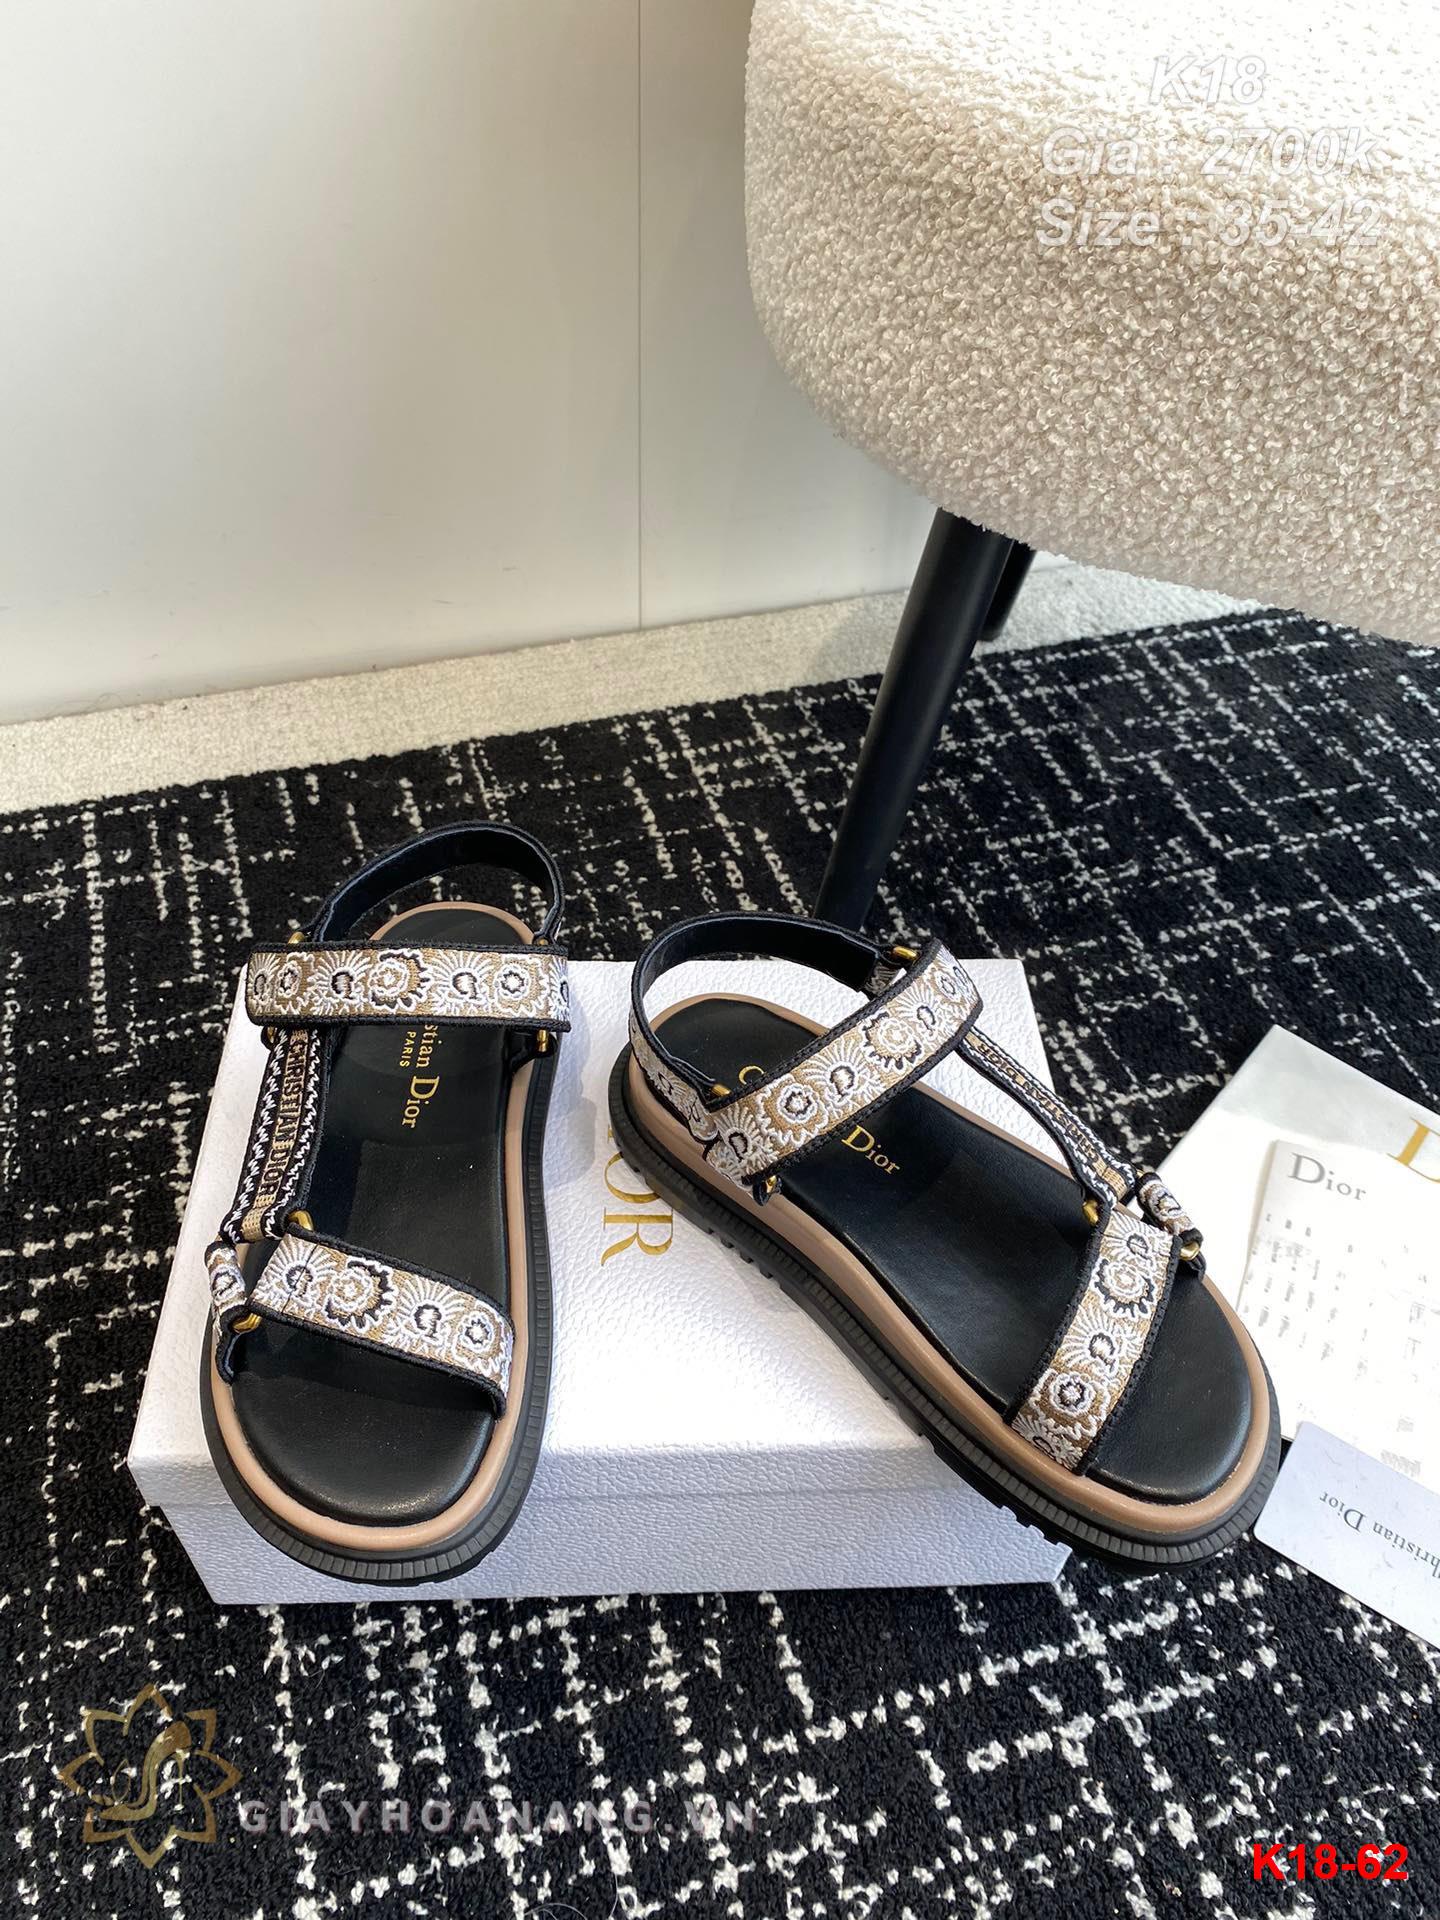 K18-62 Dior sandal siêu cấp